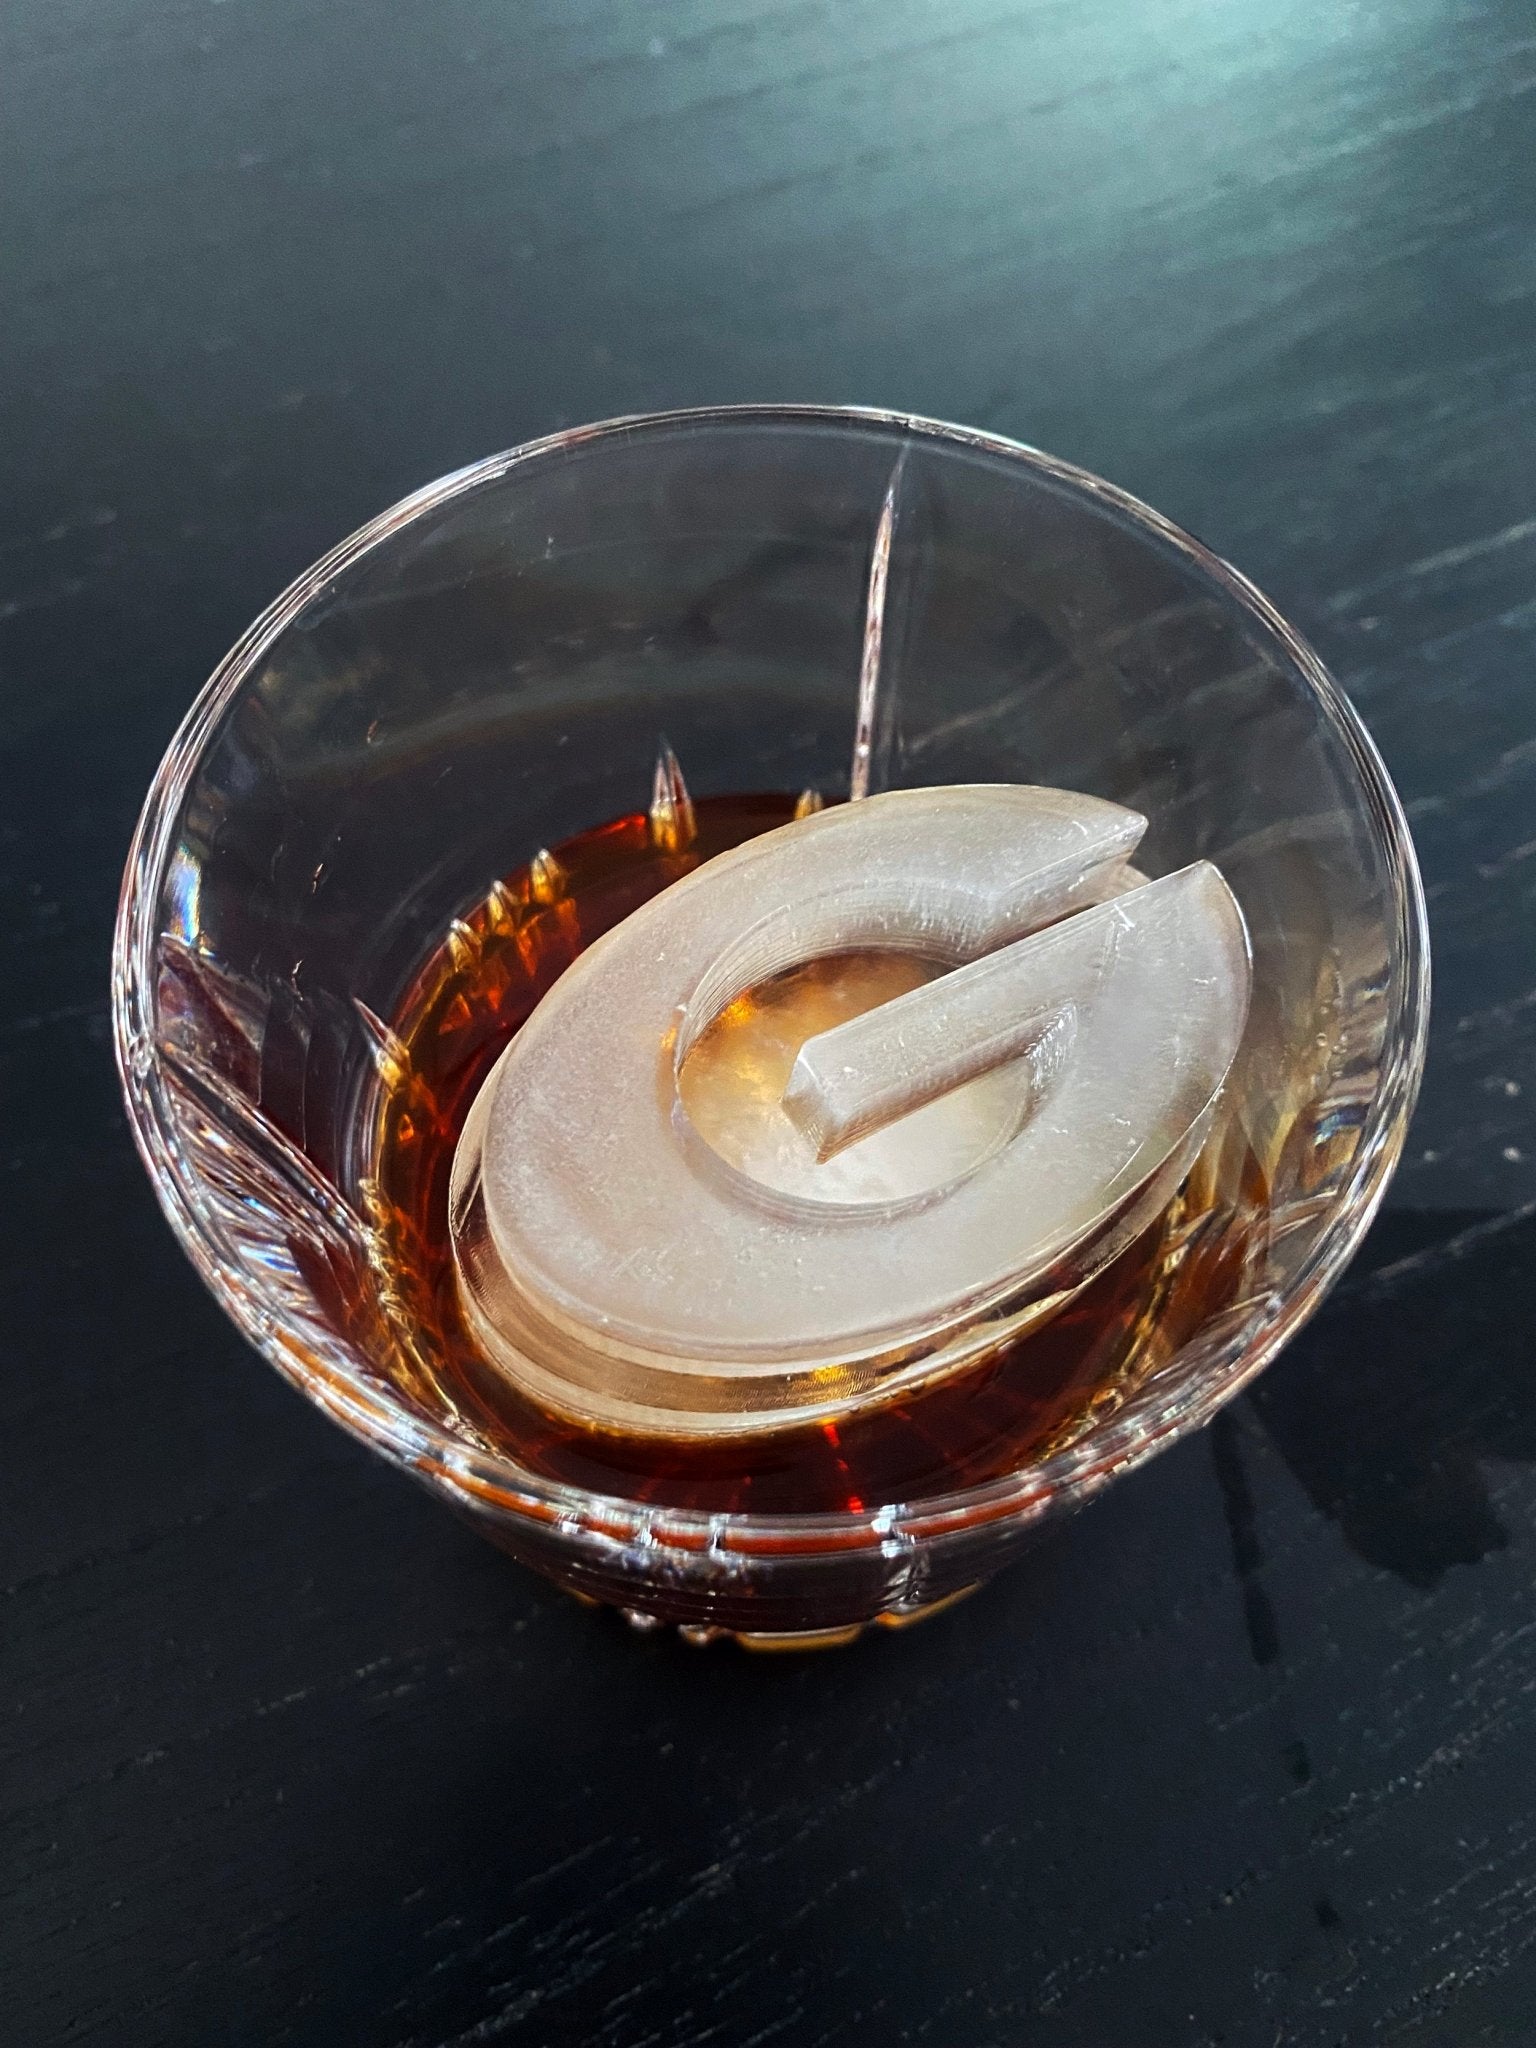 College football whiskey ice mold, Custom college logo whiskey ice